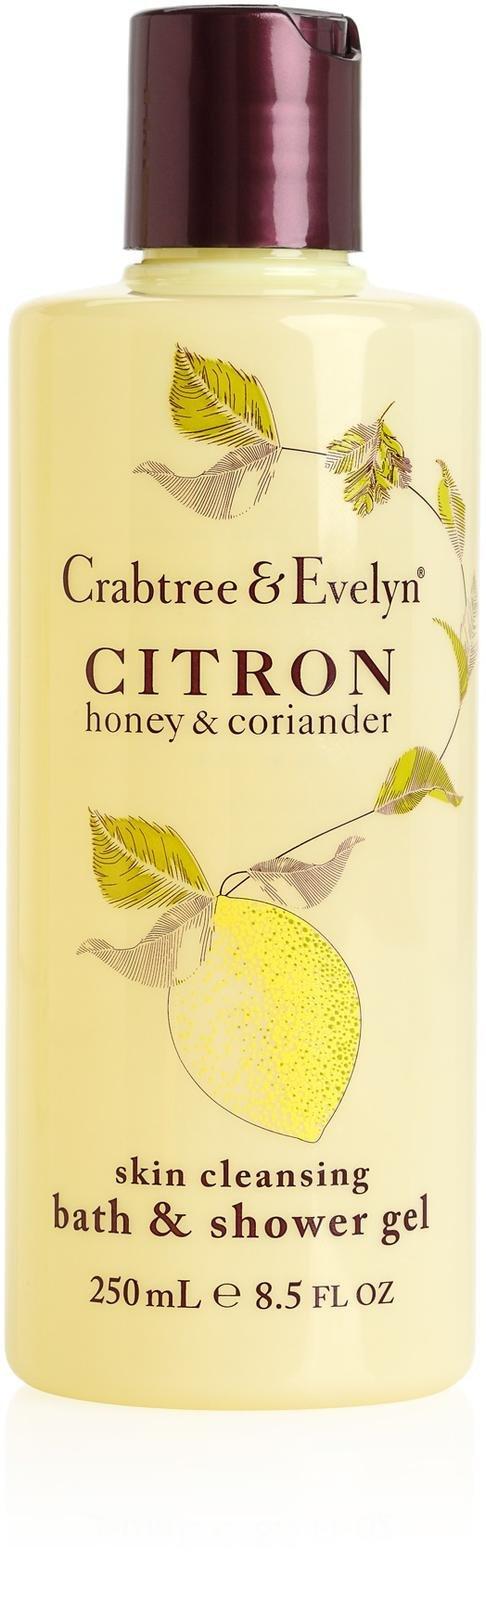 Crabtree & Evelyn Citron Bath & Shower Gel